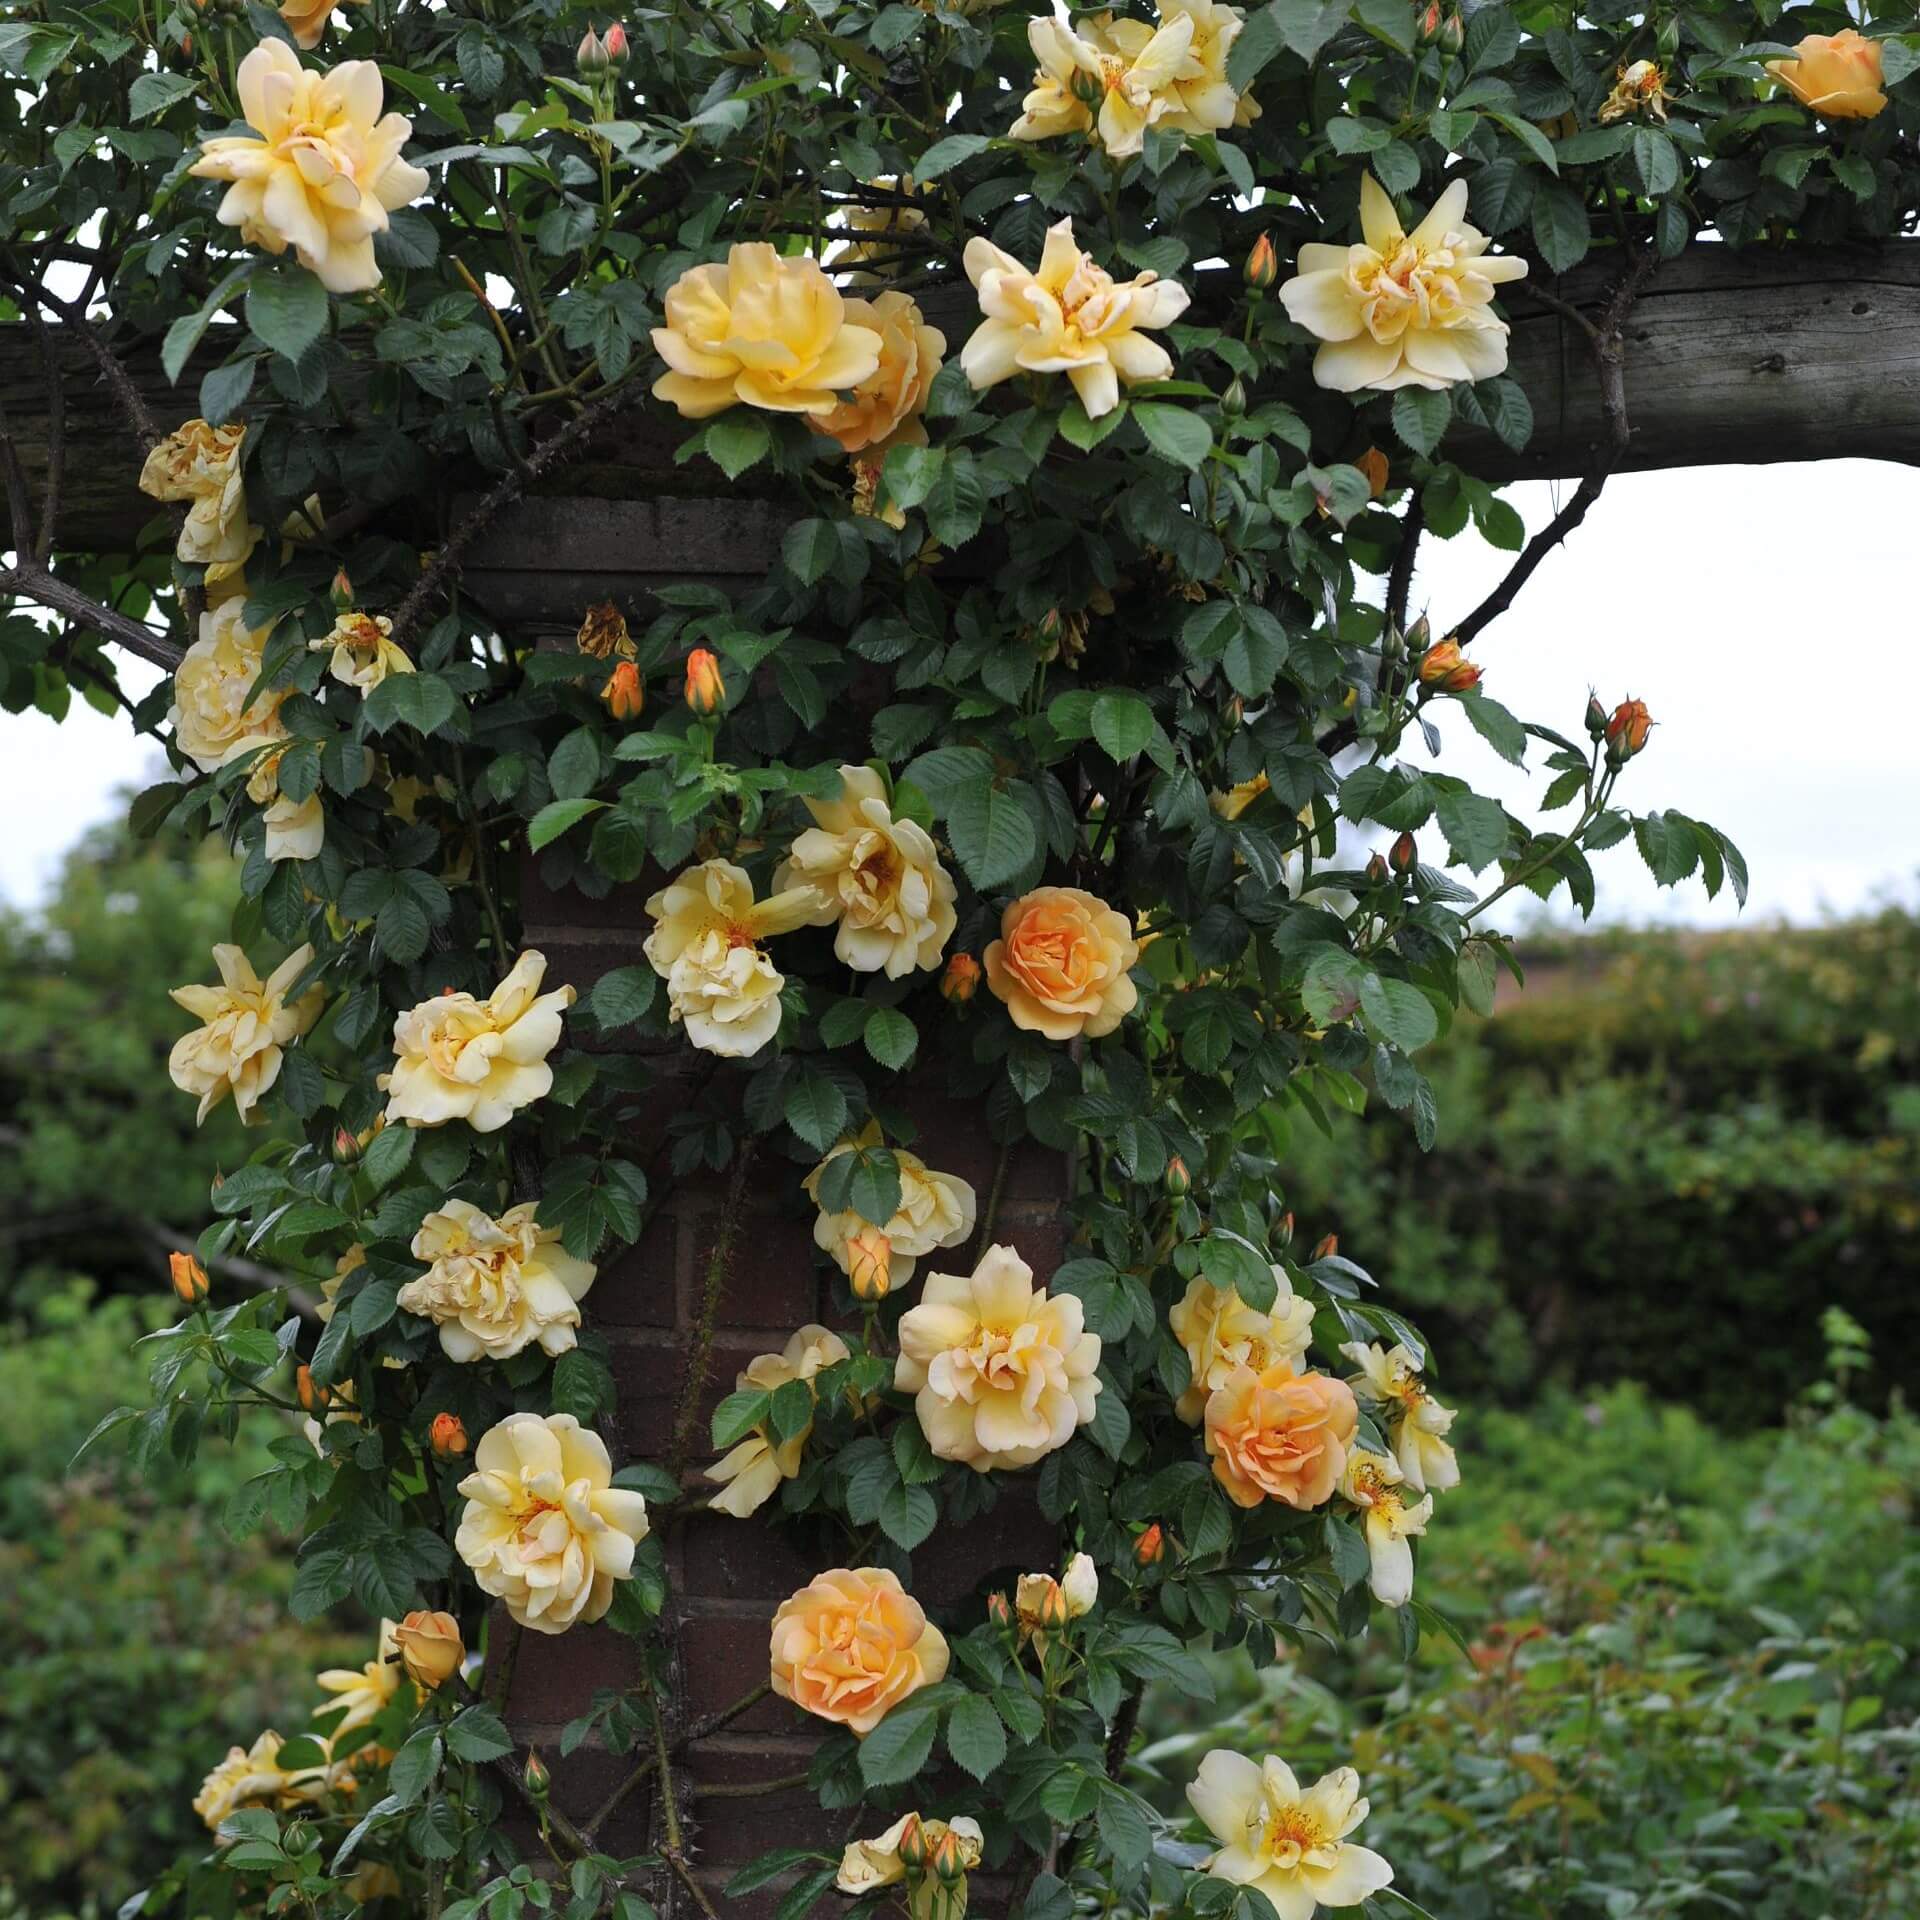 Bibernellrose 'Maigold' (Rosa pimpinellifolia 'Maigold')